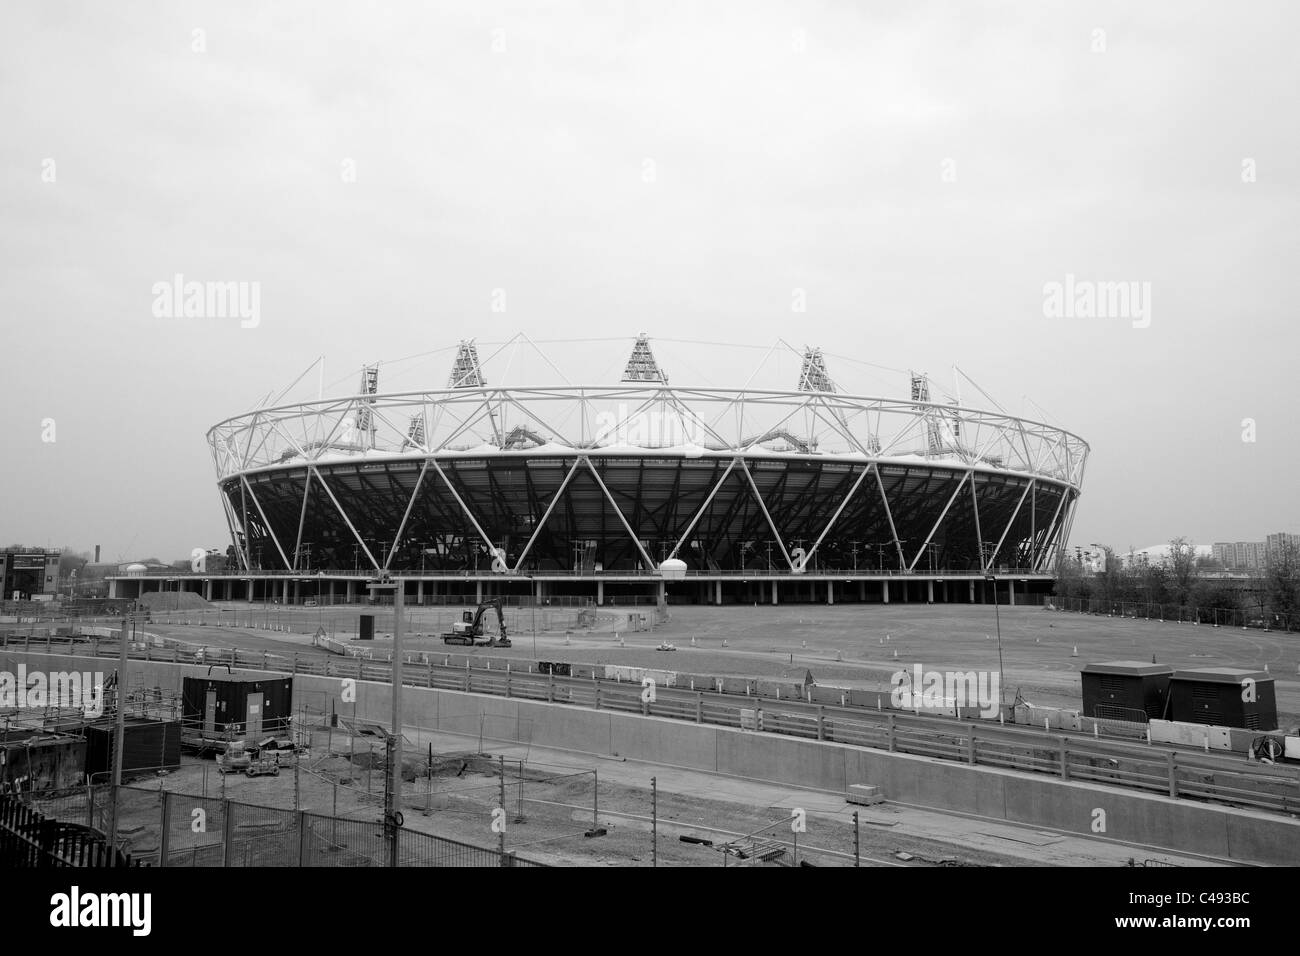 Stade olympique de Londres 2012, Stratford, London, Angleterre, Royaume-Uni. Banque D'Images